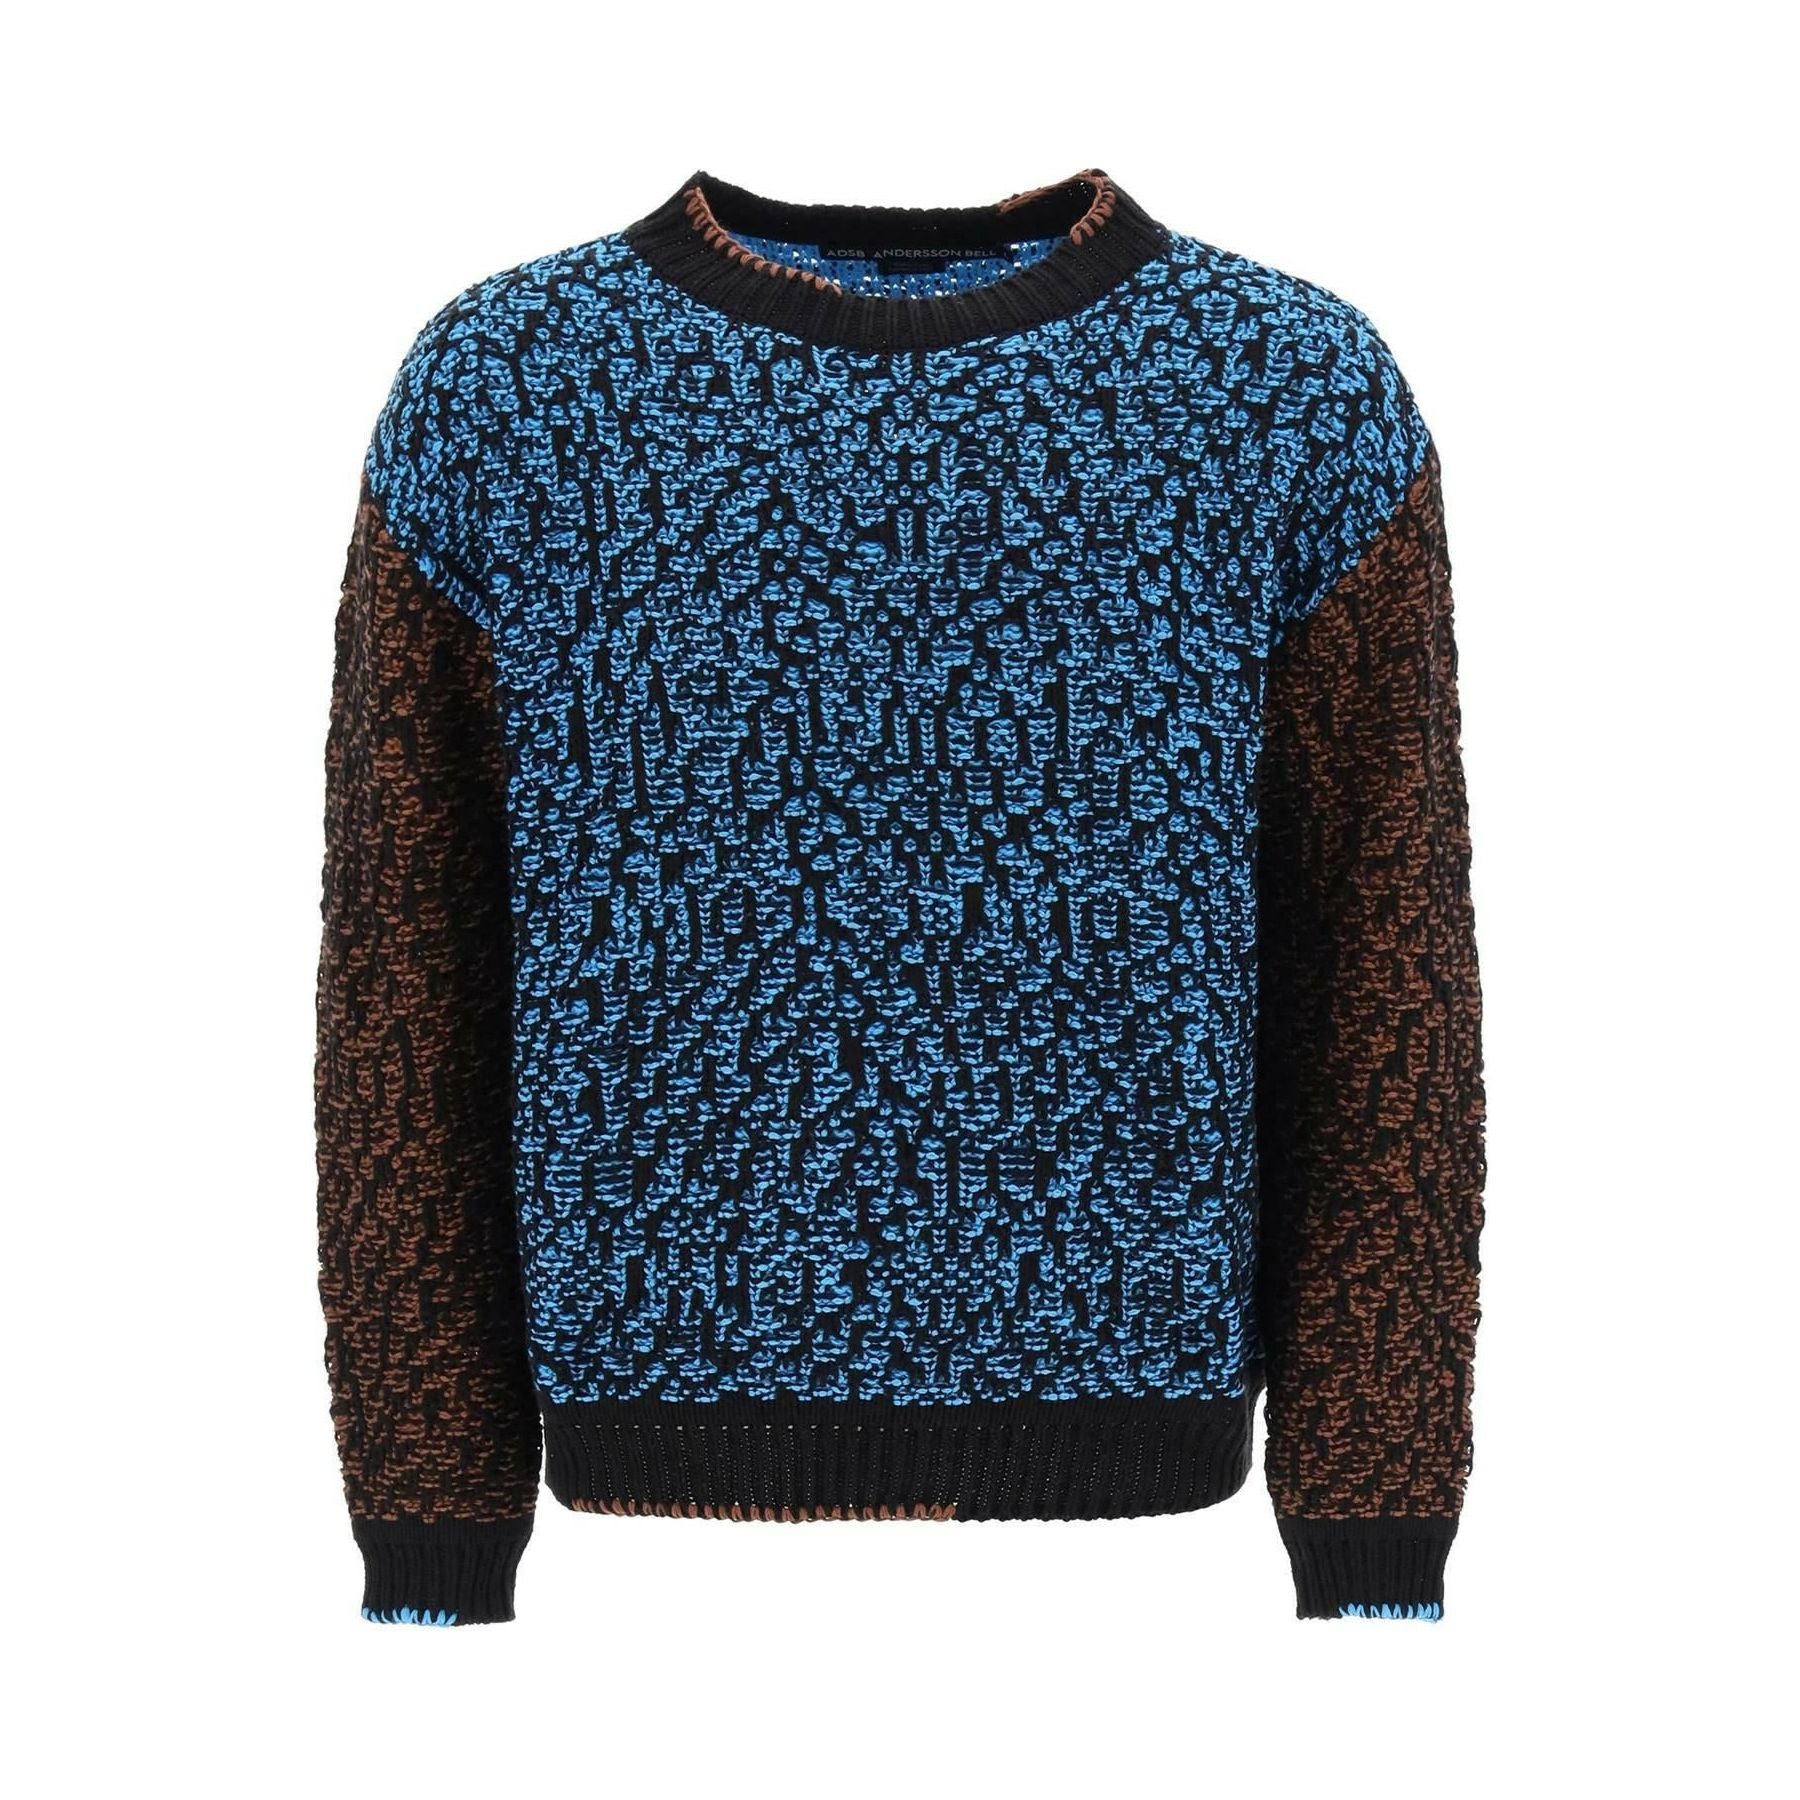 Multicolored Net Cotton Blend Sweater ANDERSSON BELL JOHN JULIA.